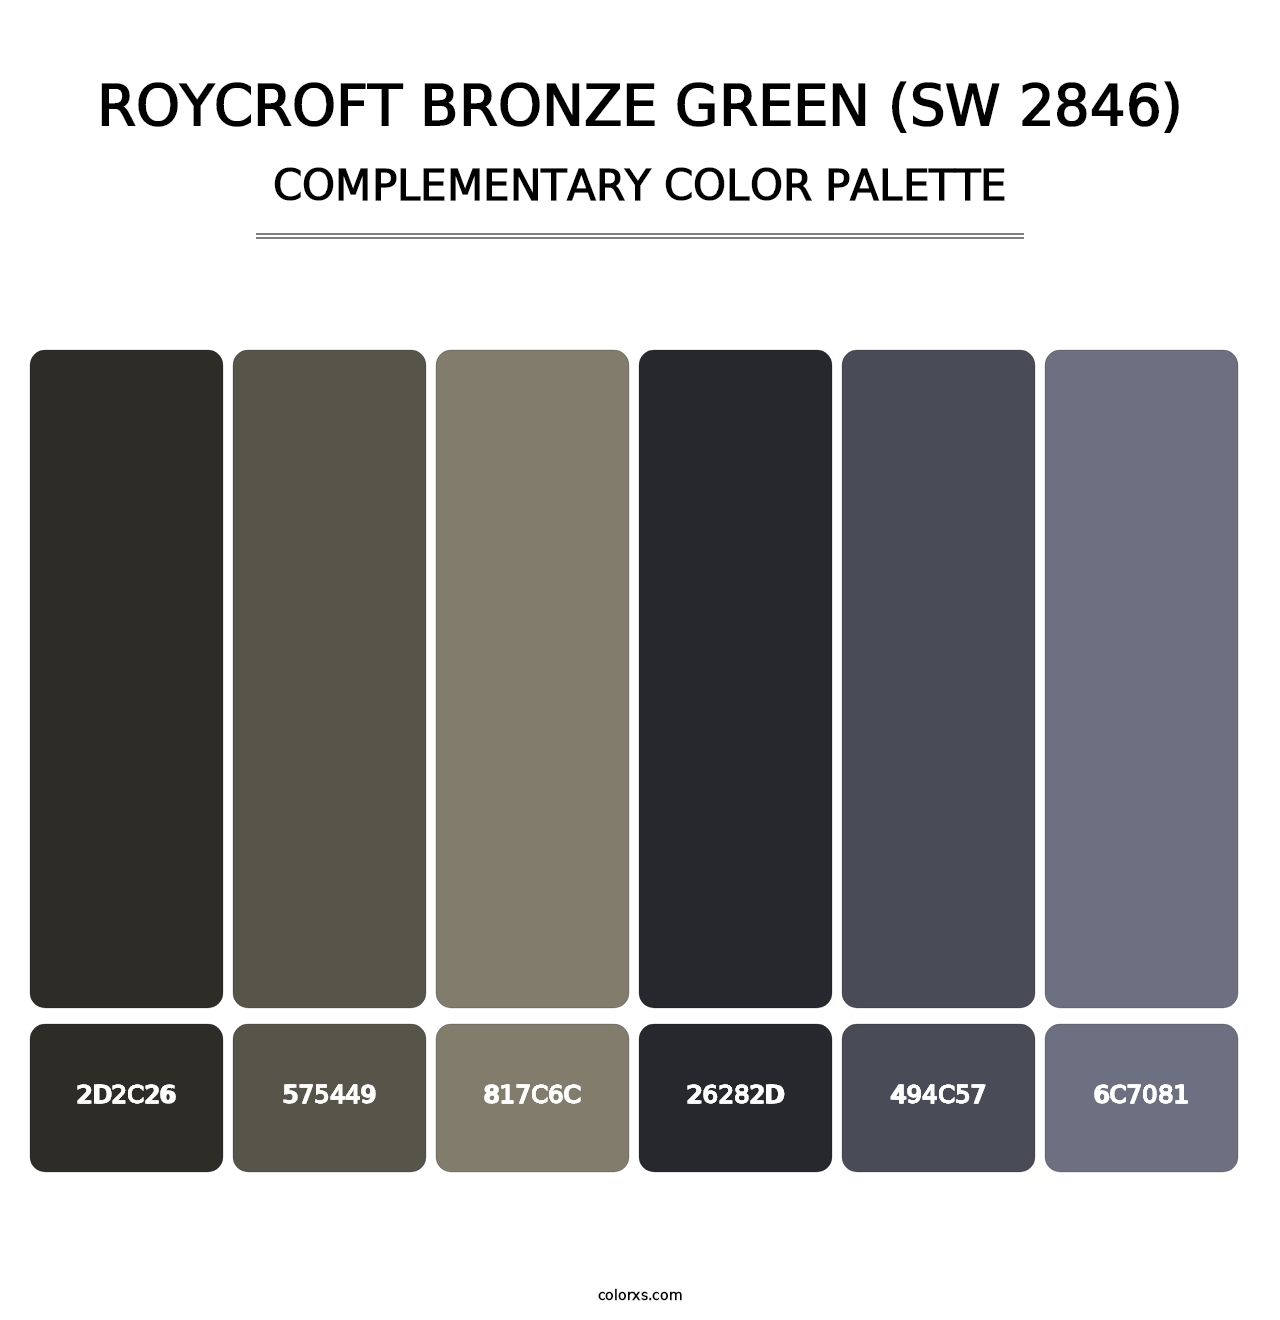 Roycroft Bronze Green (SW 2846) - Complementary Color Palette